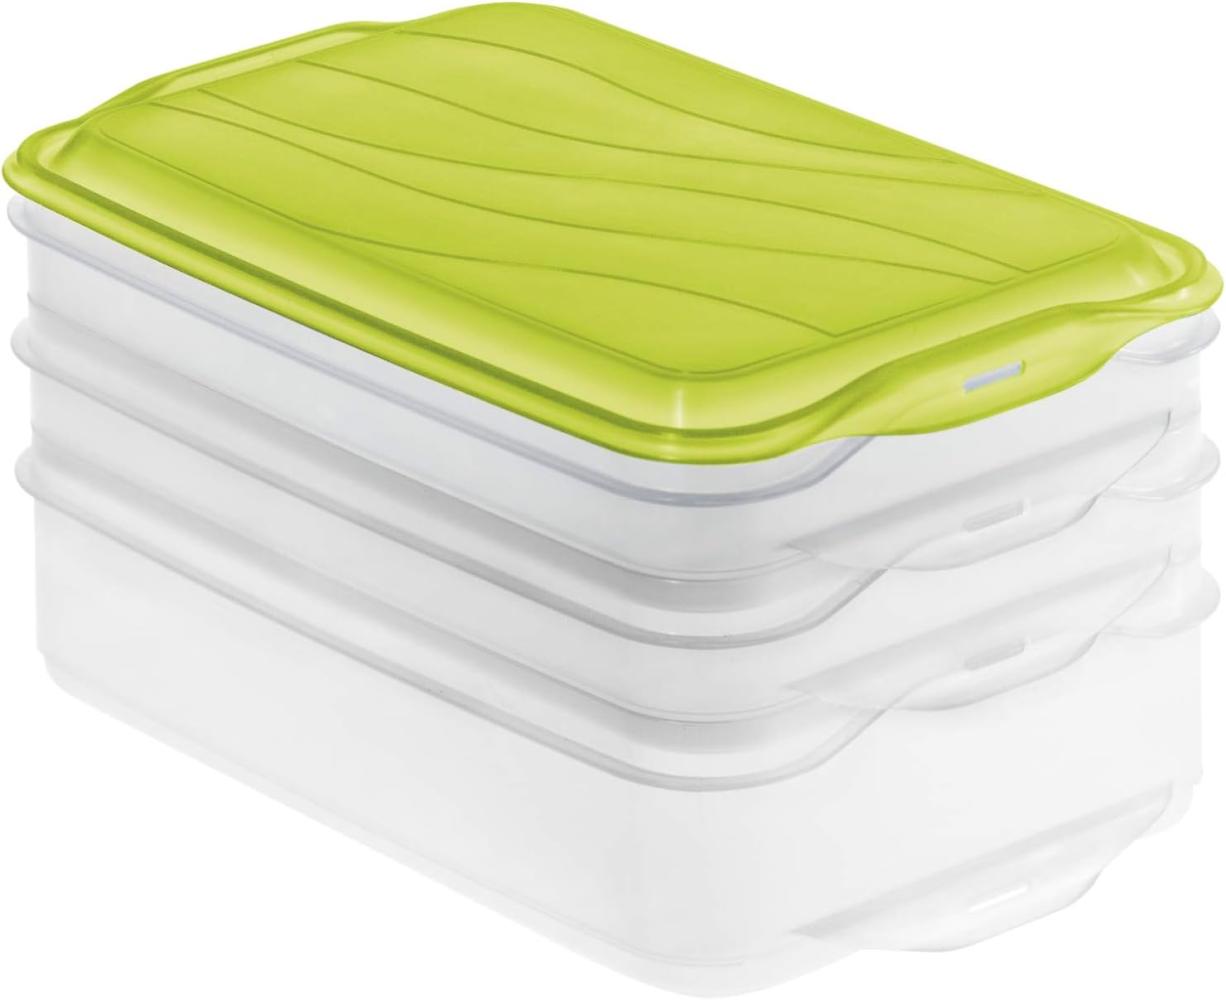 Rotho Rondo 3-teilige Vorratsdose 2x 0,75l und 1x 1,35l mit Deckel, Kunststoff (PP) BPA-frei, grün, 3-teilig (1x1. 35l + 2x0. 75l) (23,5 x 15,5 x 11,5 cm) Bild 1